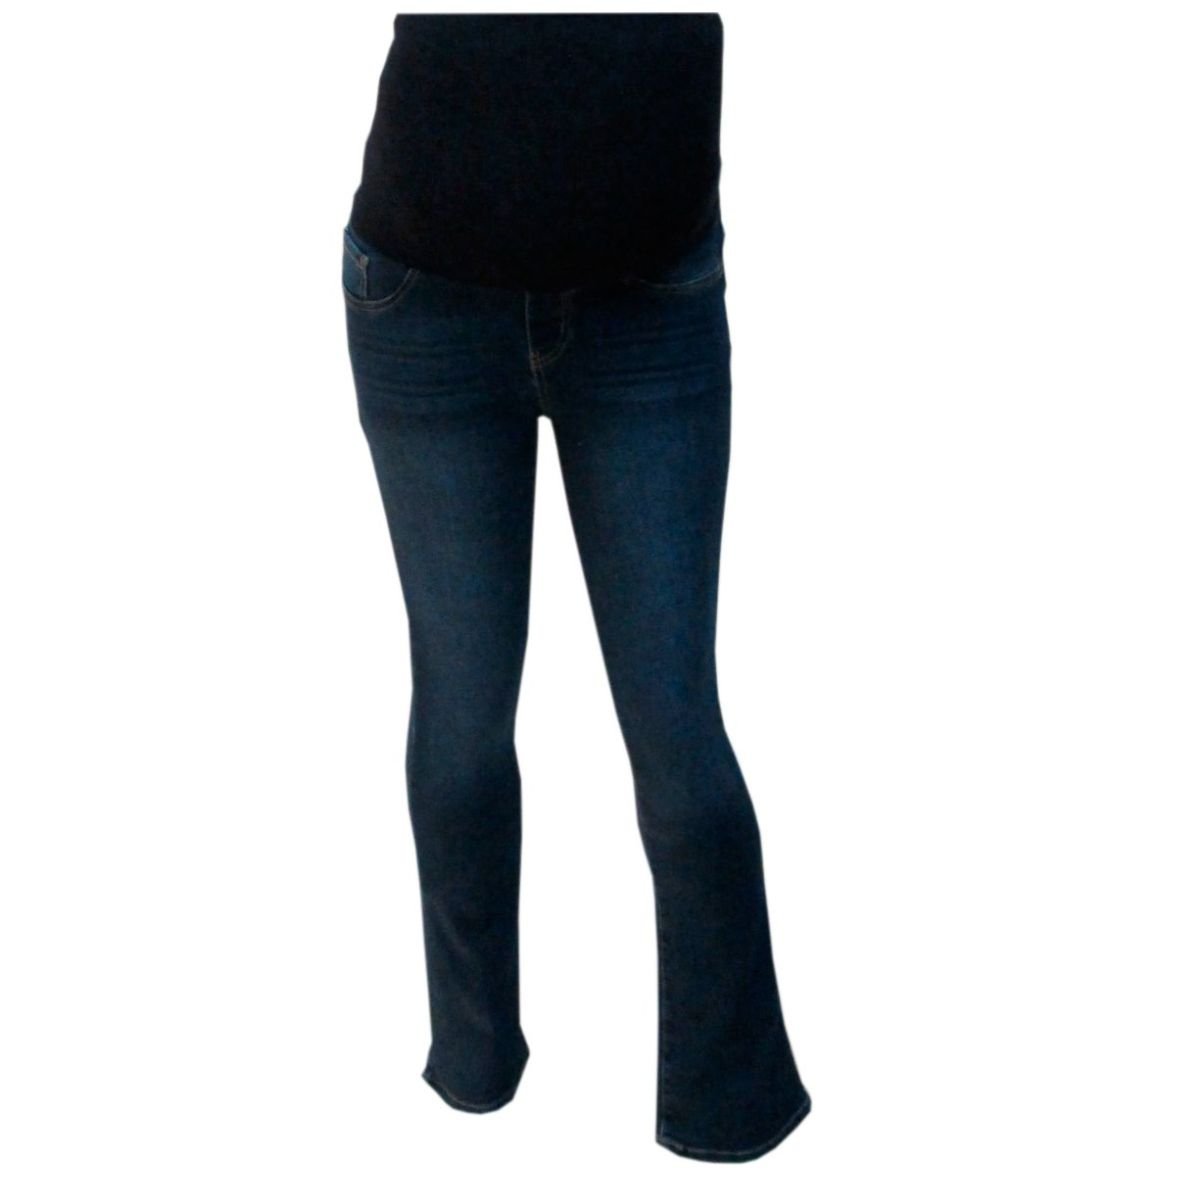 Pantalon Jeans Skinny Cintura Alta Lee Mujer 02t3